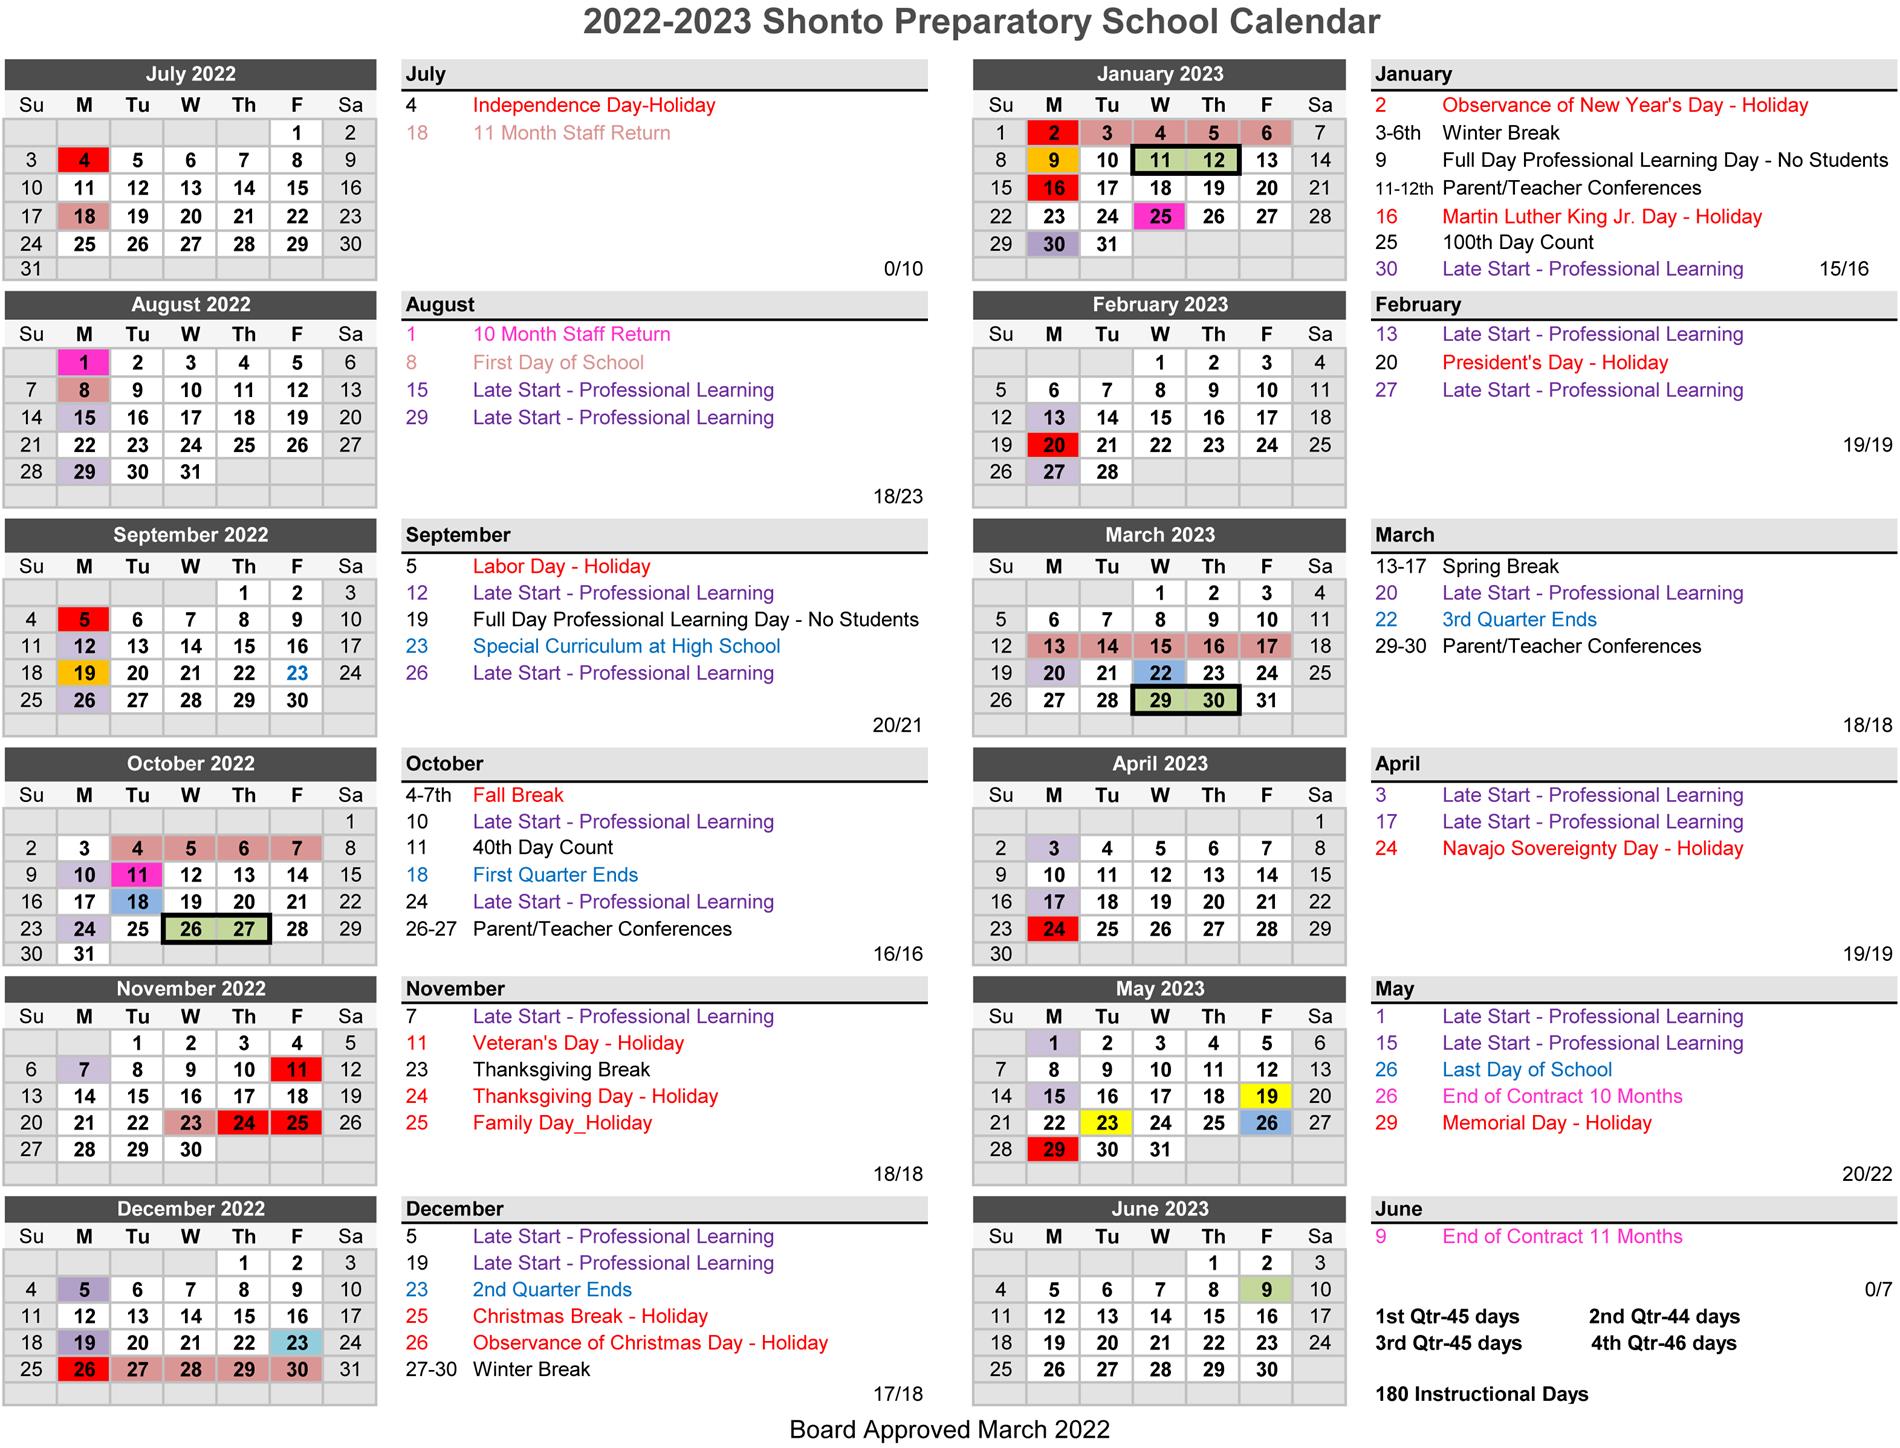 22-23 SY Calendar